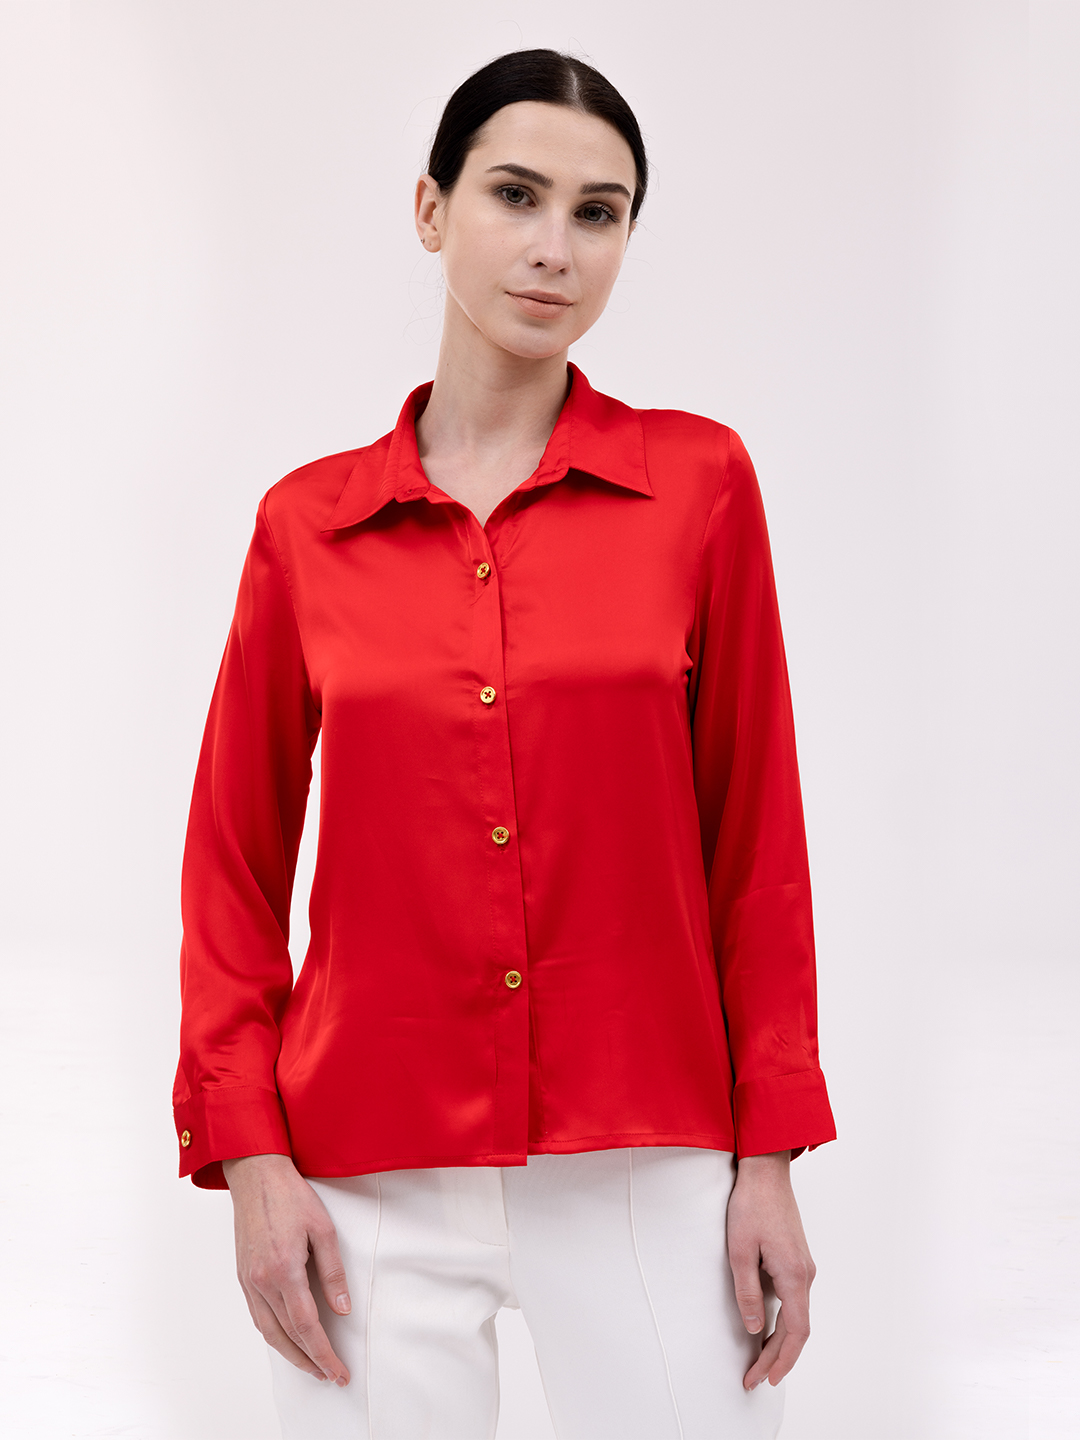 Red 9-5 Sleek Shirt -2